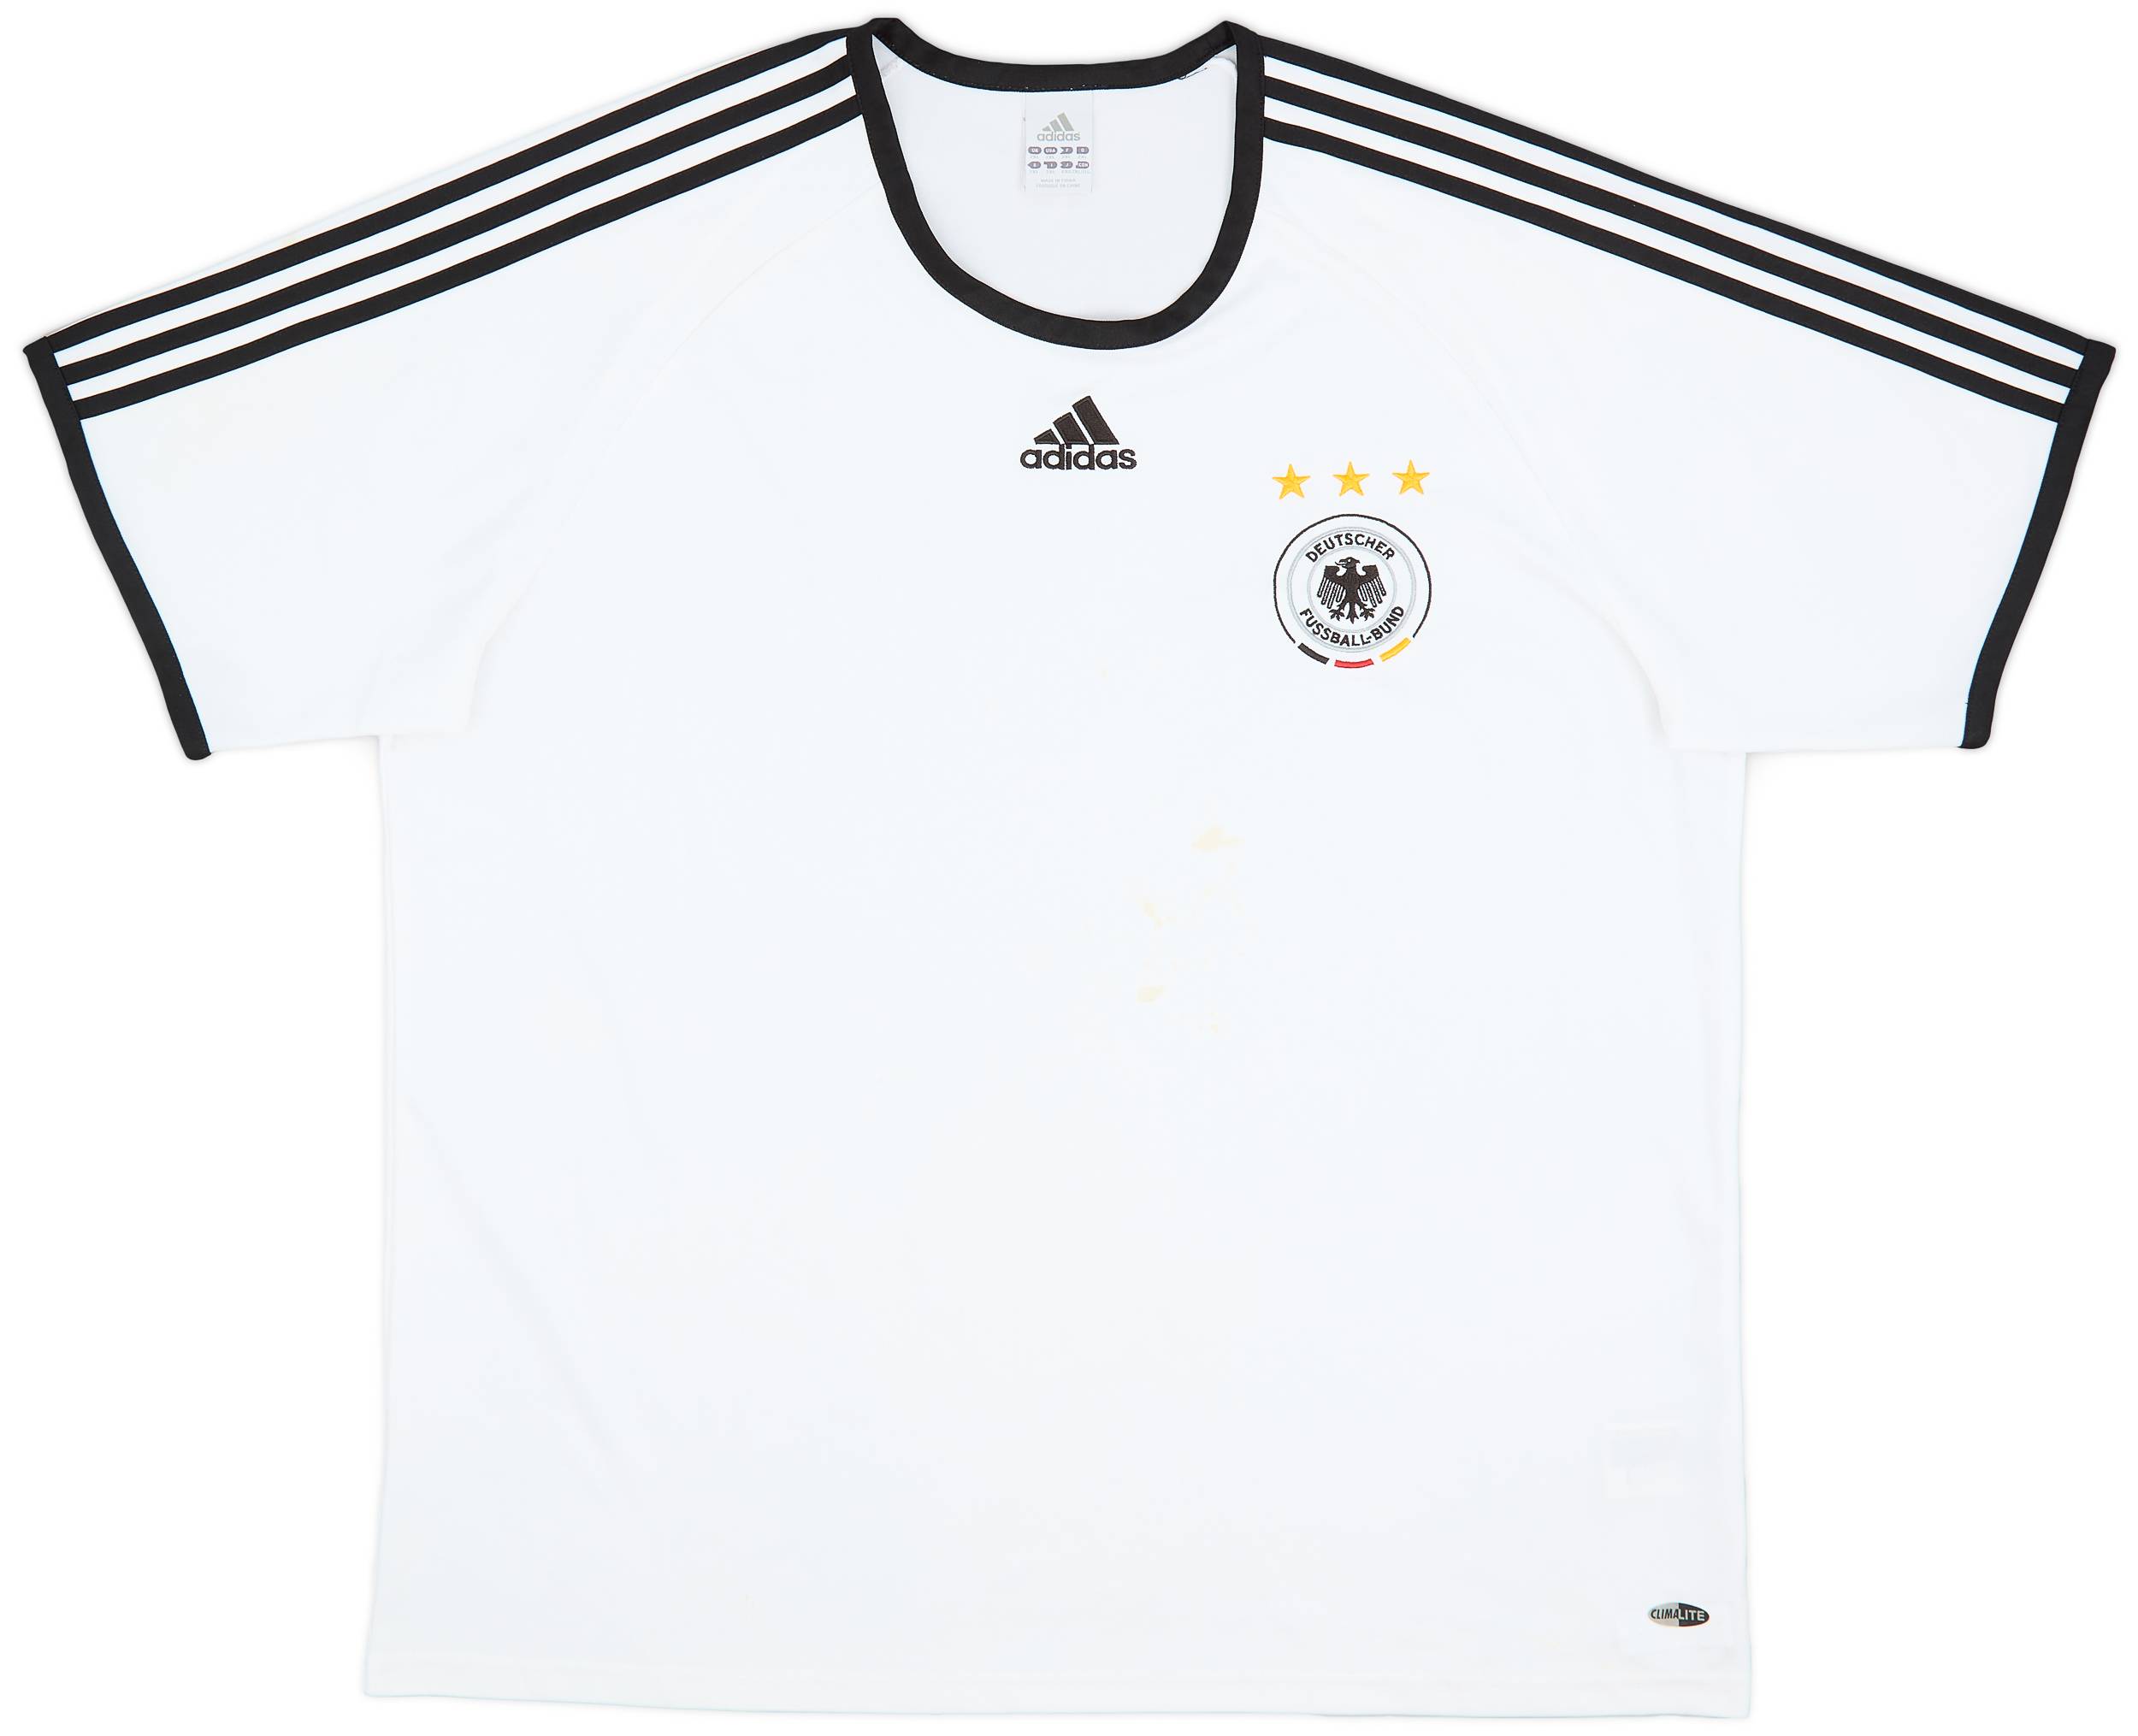 2007-08 Germany adidas Training Shirt - 6/10 - (XXL)